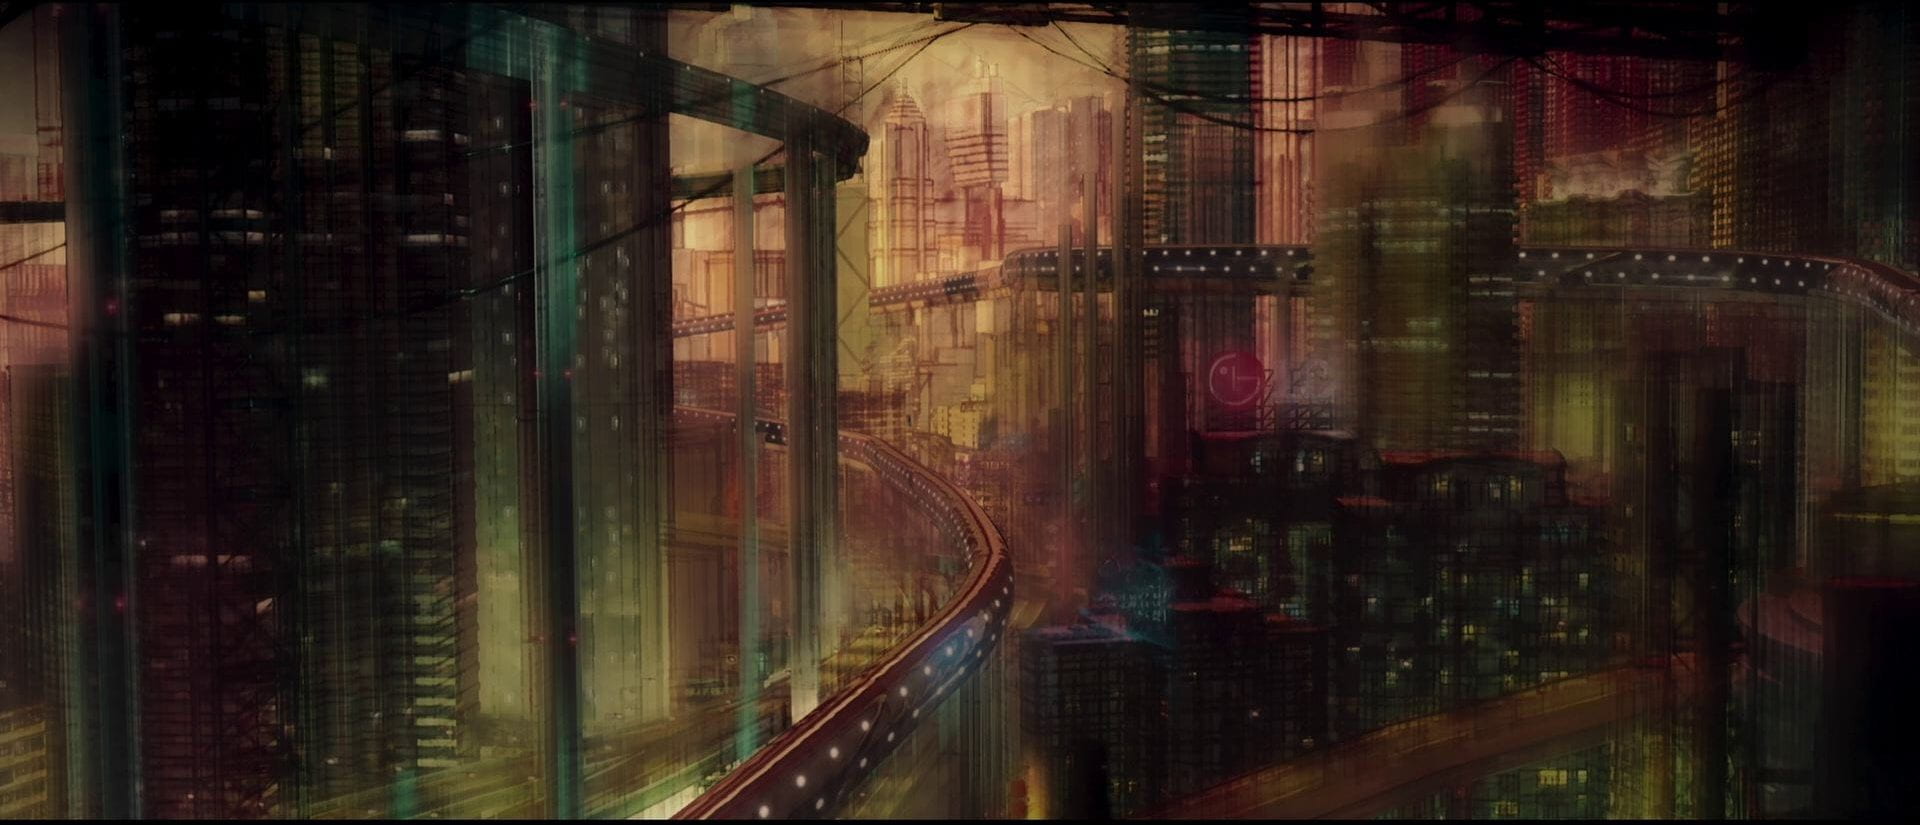 A train runs through a futuristic cityscape